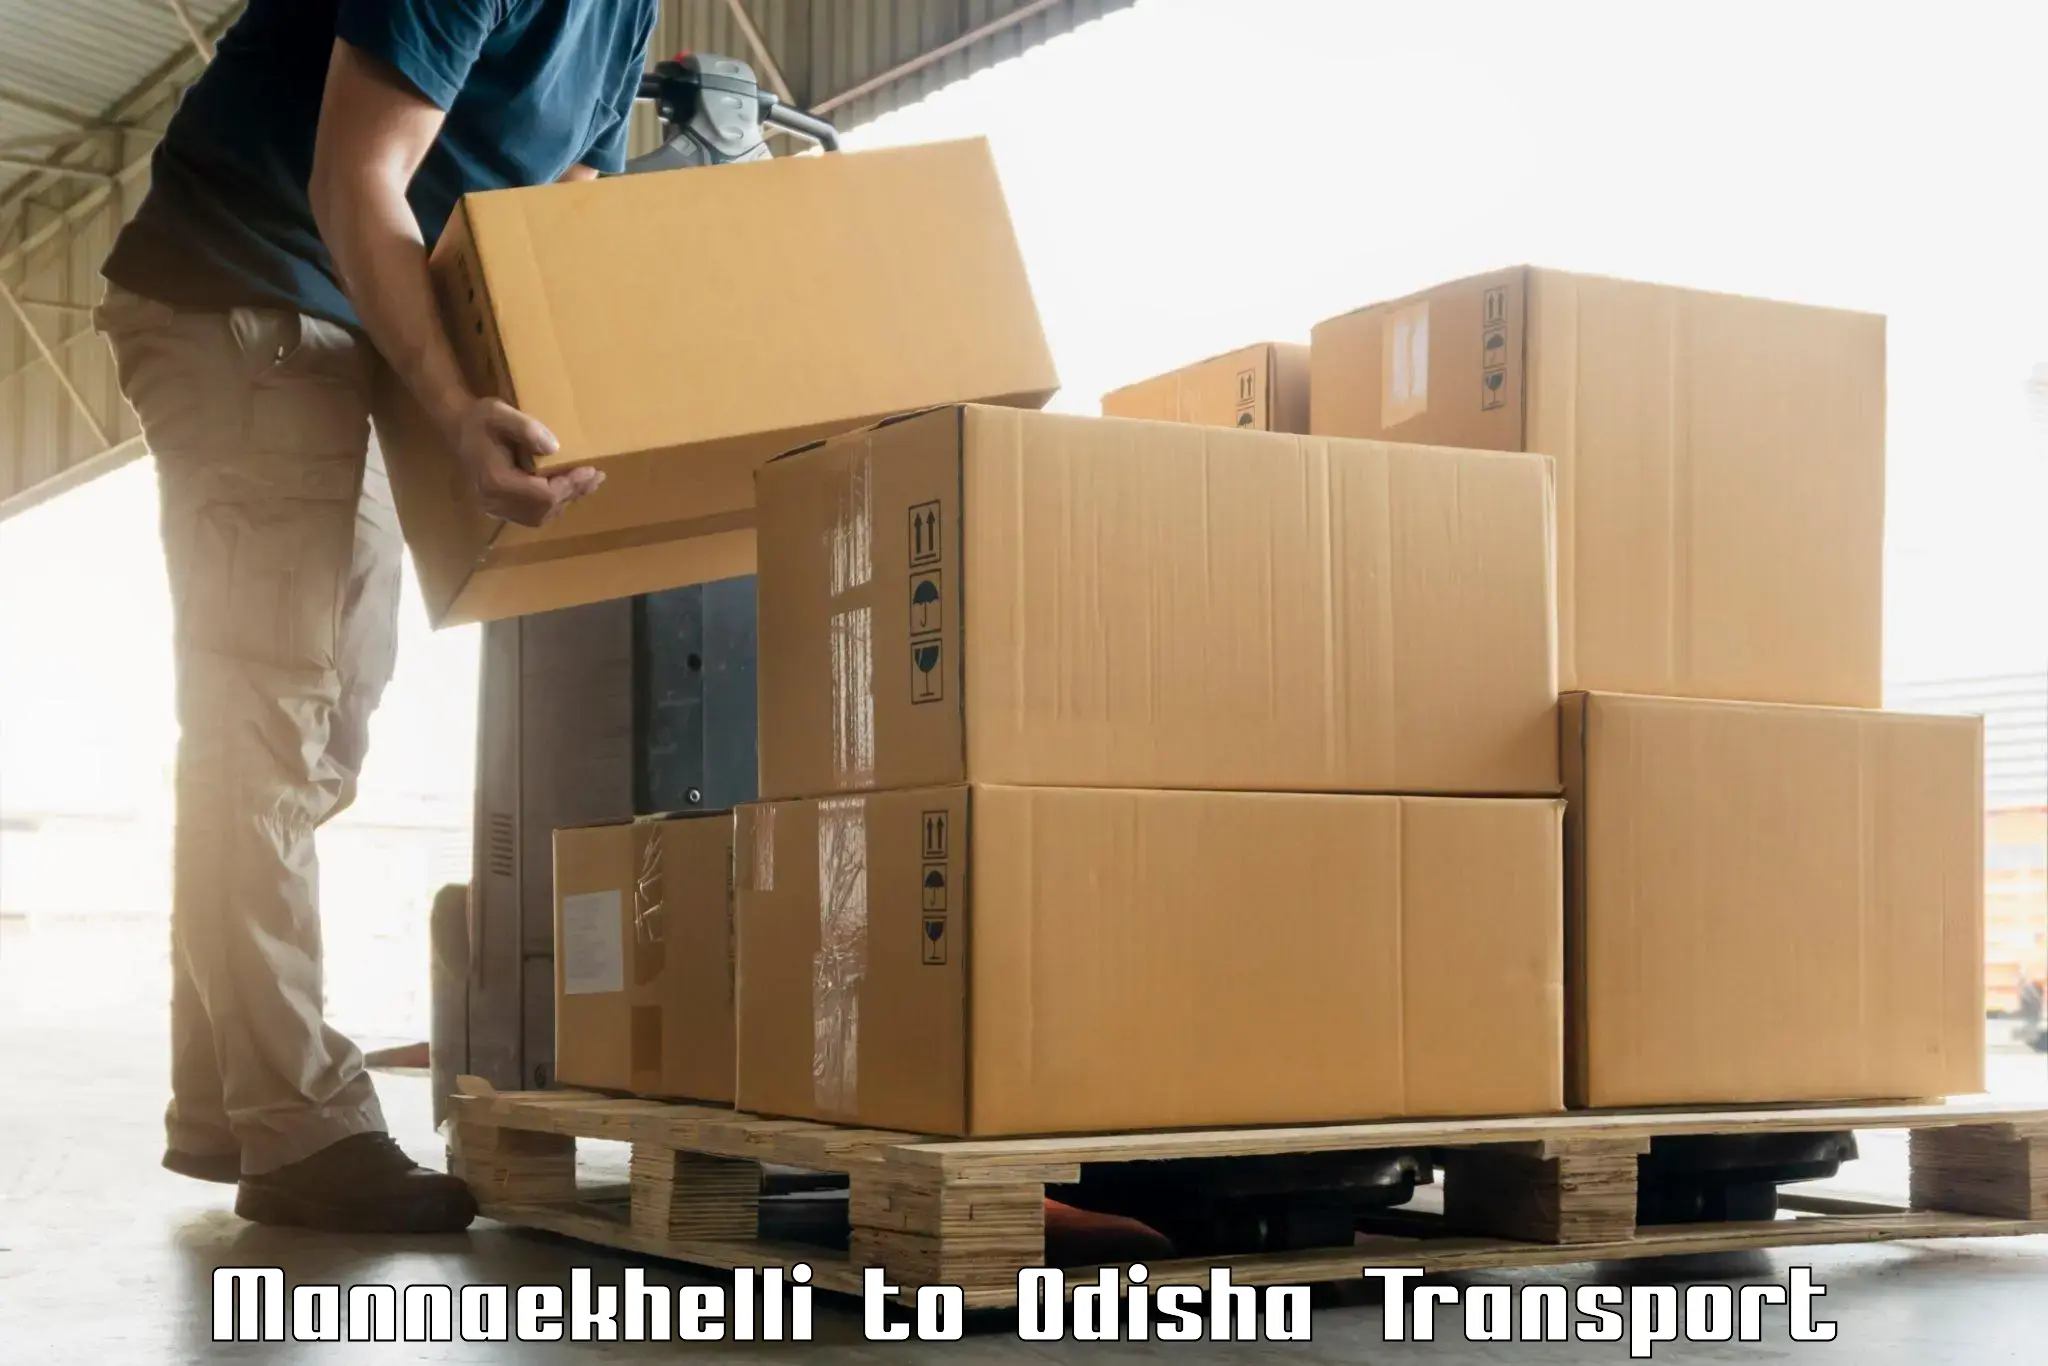 Delivery service Mannaekhelli to Telkoi